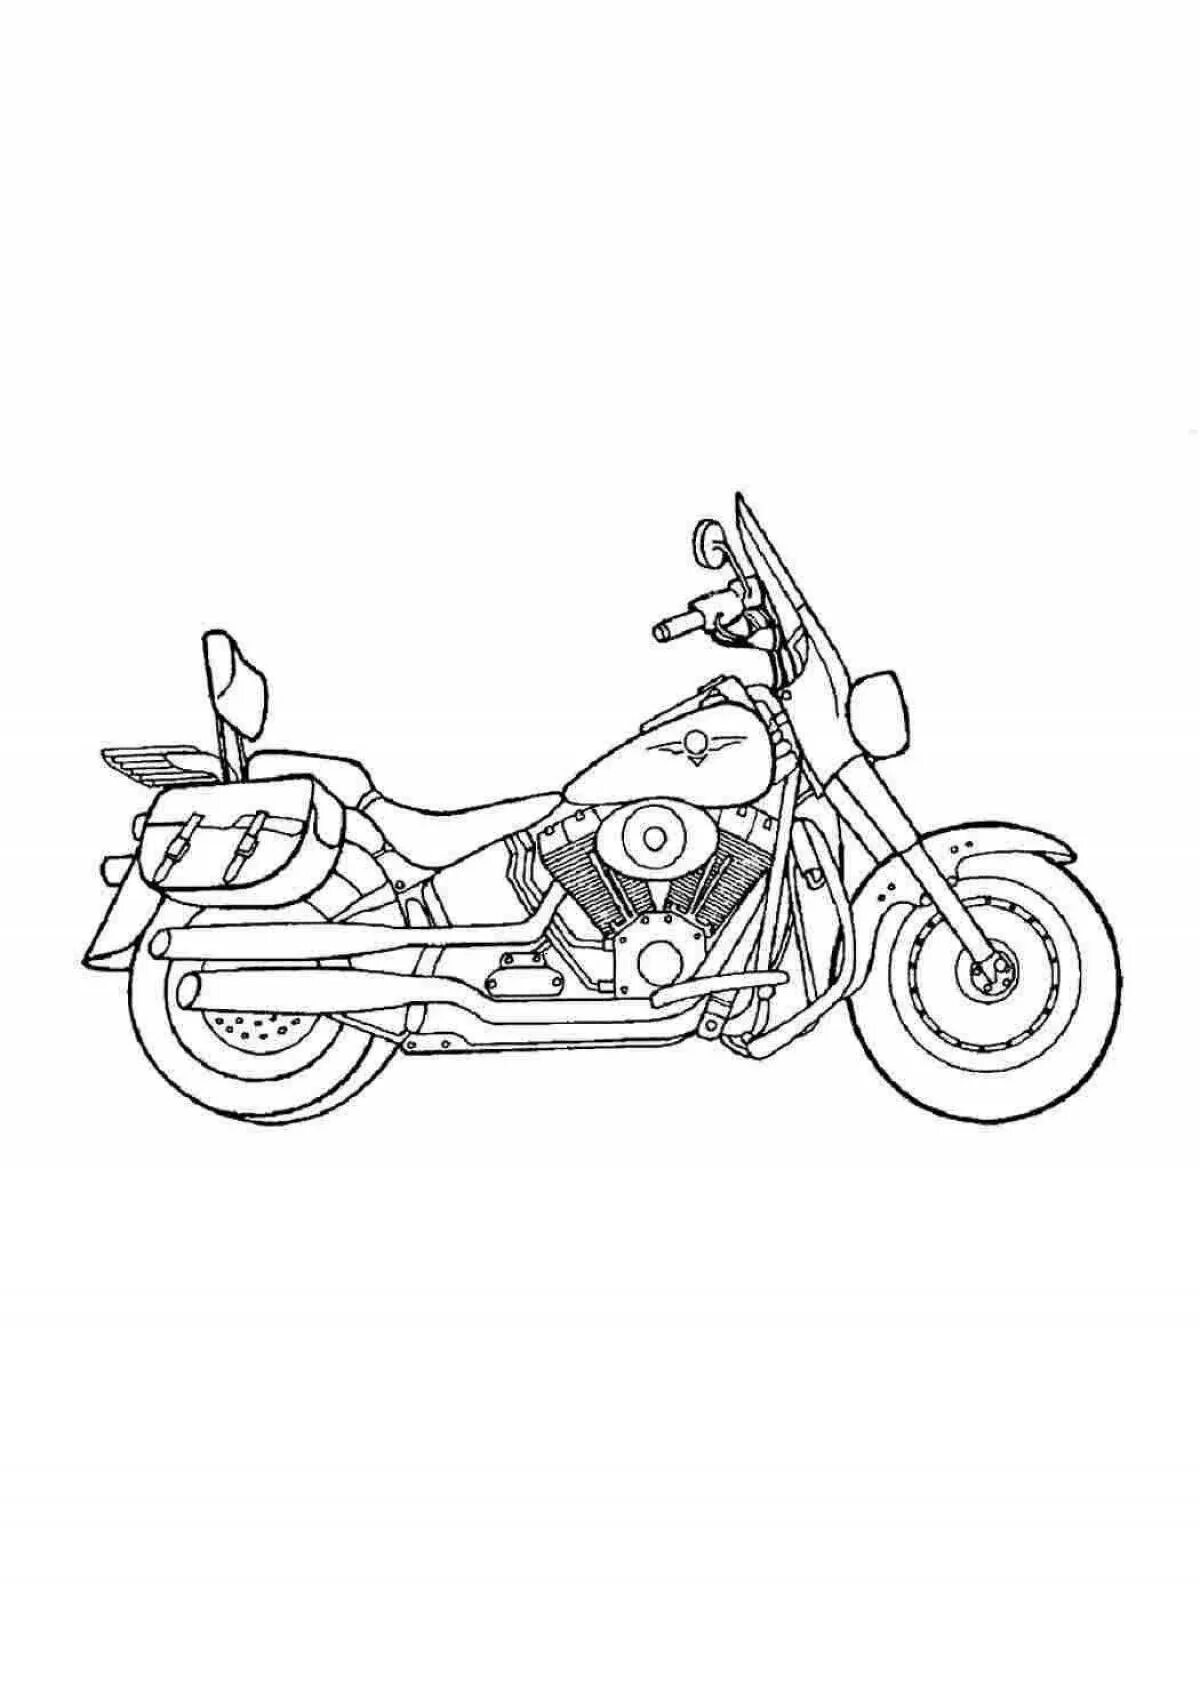 Раскраска мотоцикл ИЖ Планета 5. Раскраска мотоцикл ИЖ Юпитер 5. Раскраска мотоцикл ИЖ Планета 5 с коляской. Раскраска ИЖ Планета 5.